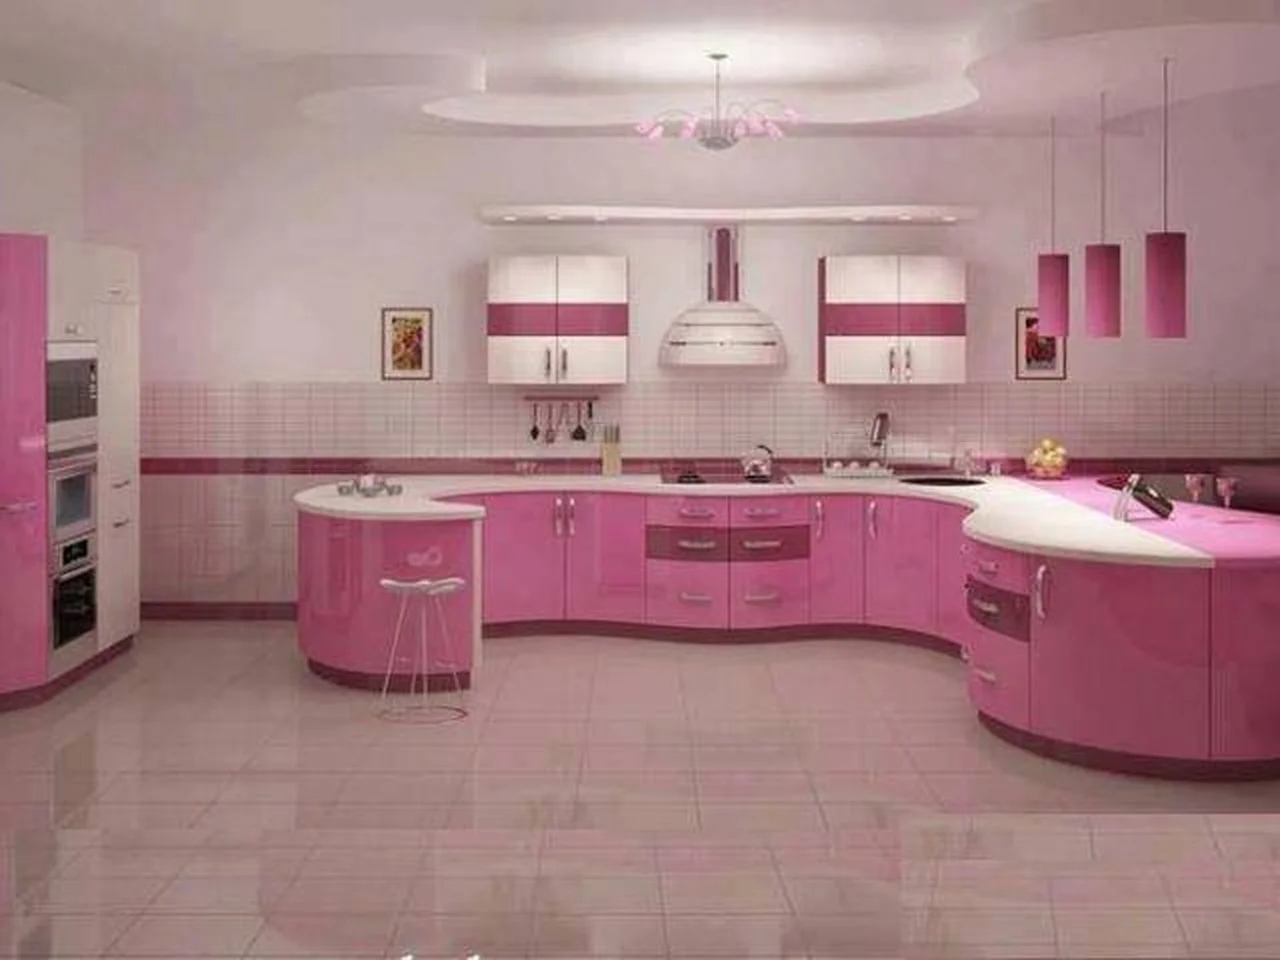 Kuchnia na różowo